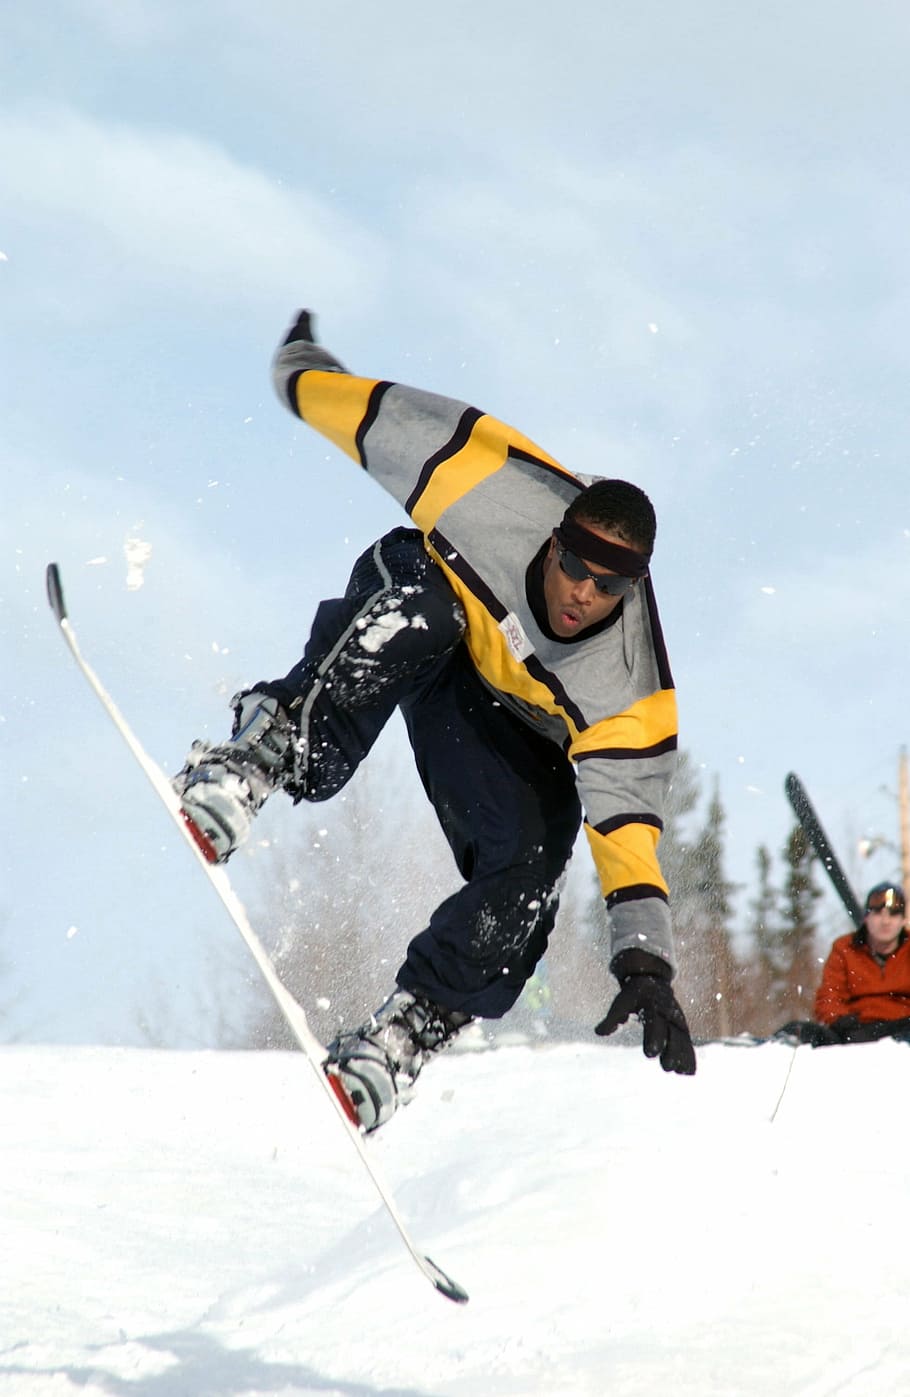 manusia snowboarding, siang hari, snowboarding, snowboarder, olahraga, kesenangan, gunung, snowboard, musim dingin, salju